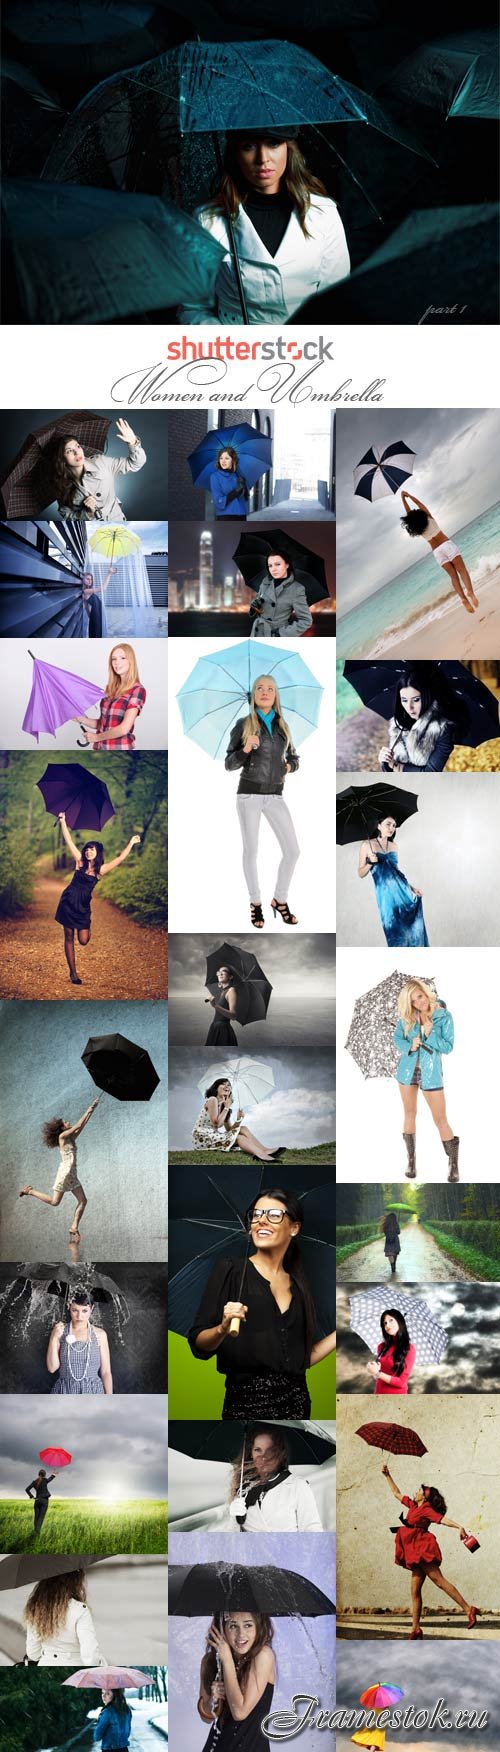 Women and Umbrella - 1